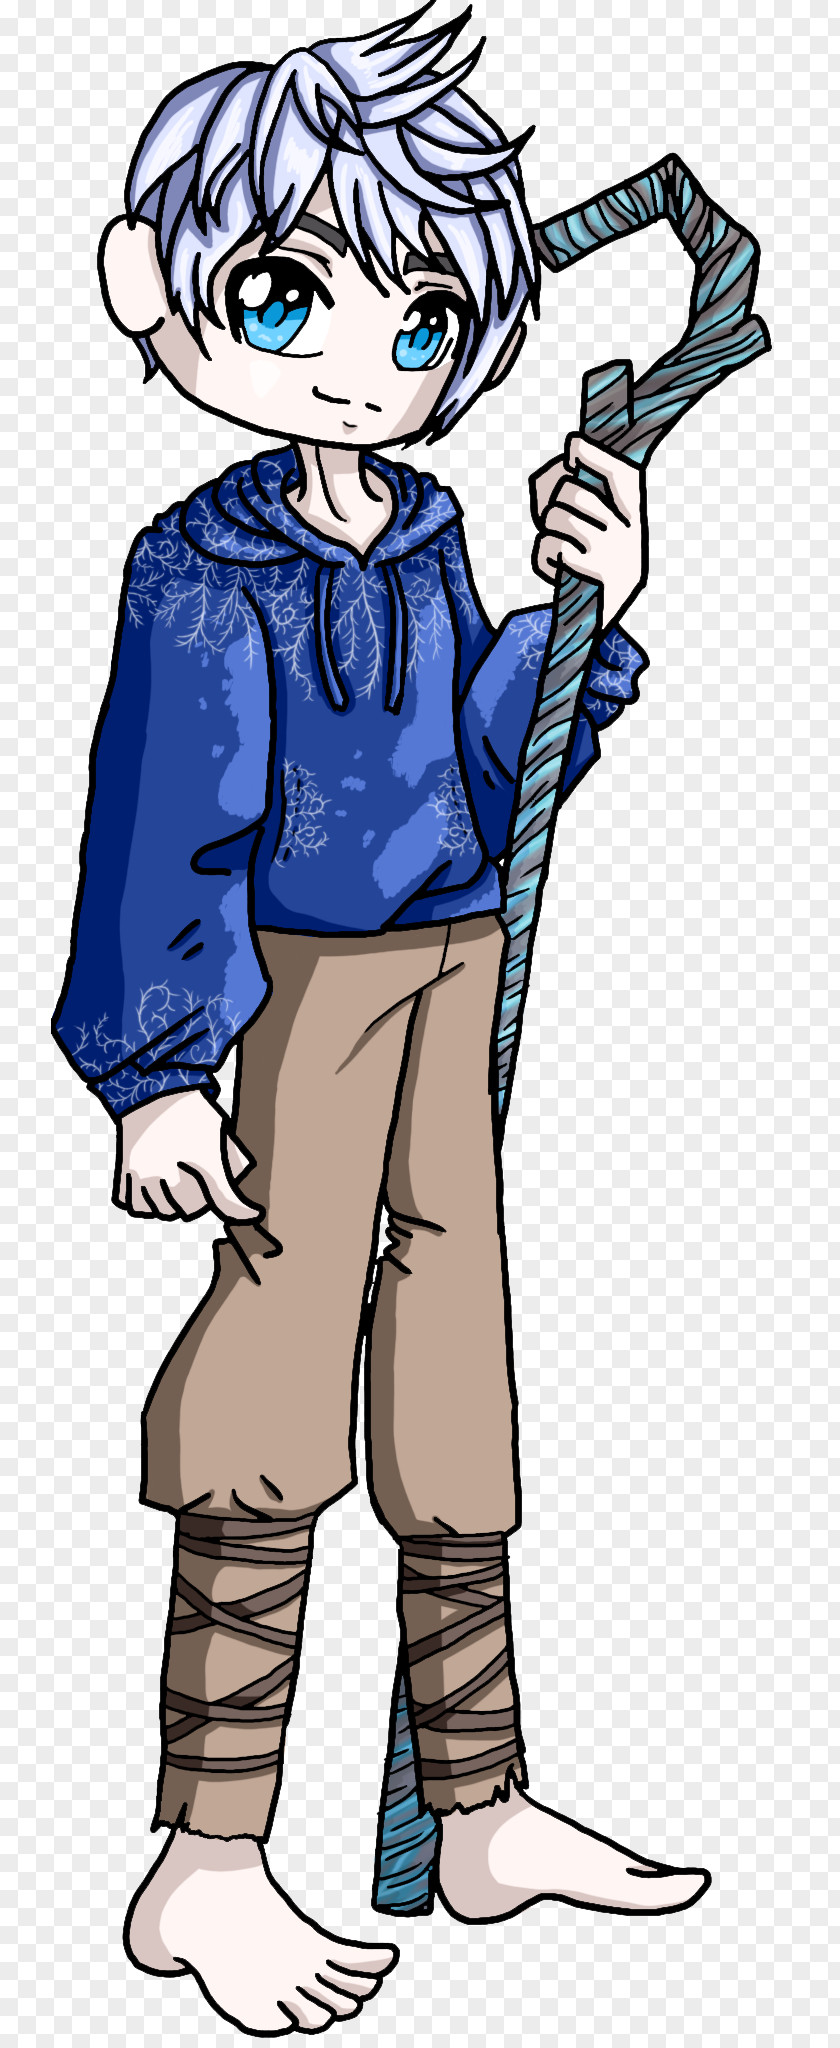 Jack Frost Costume Headgear Cartoon Clip Art PNG